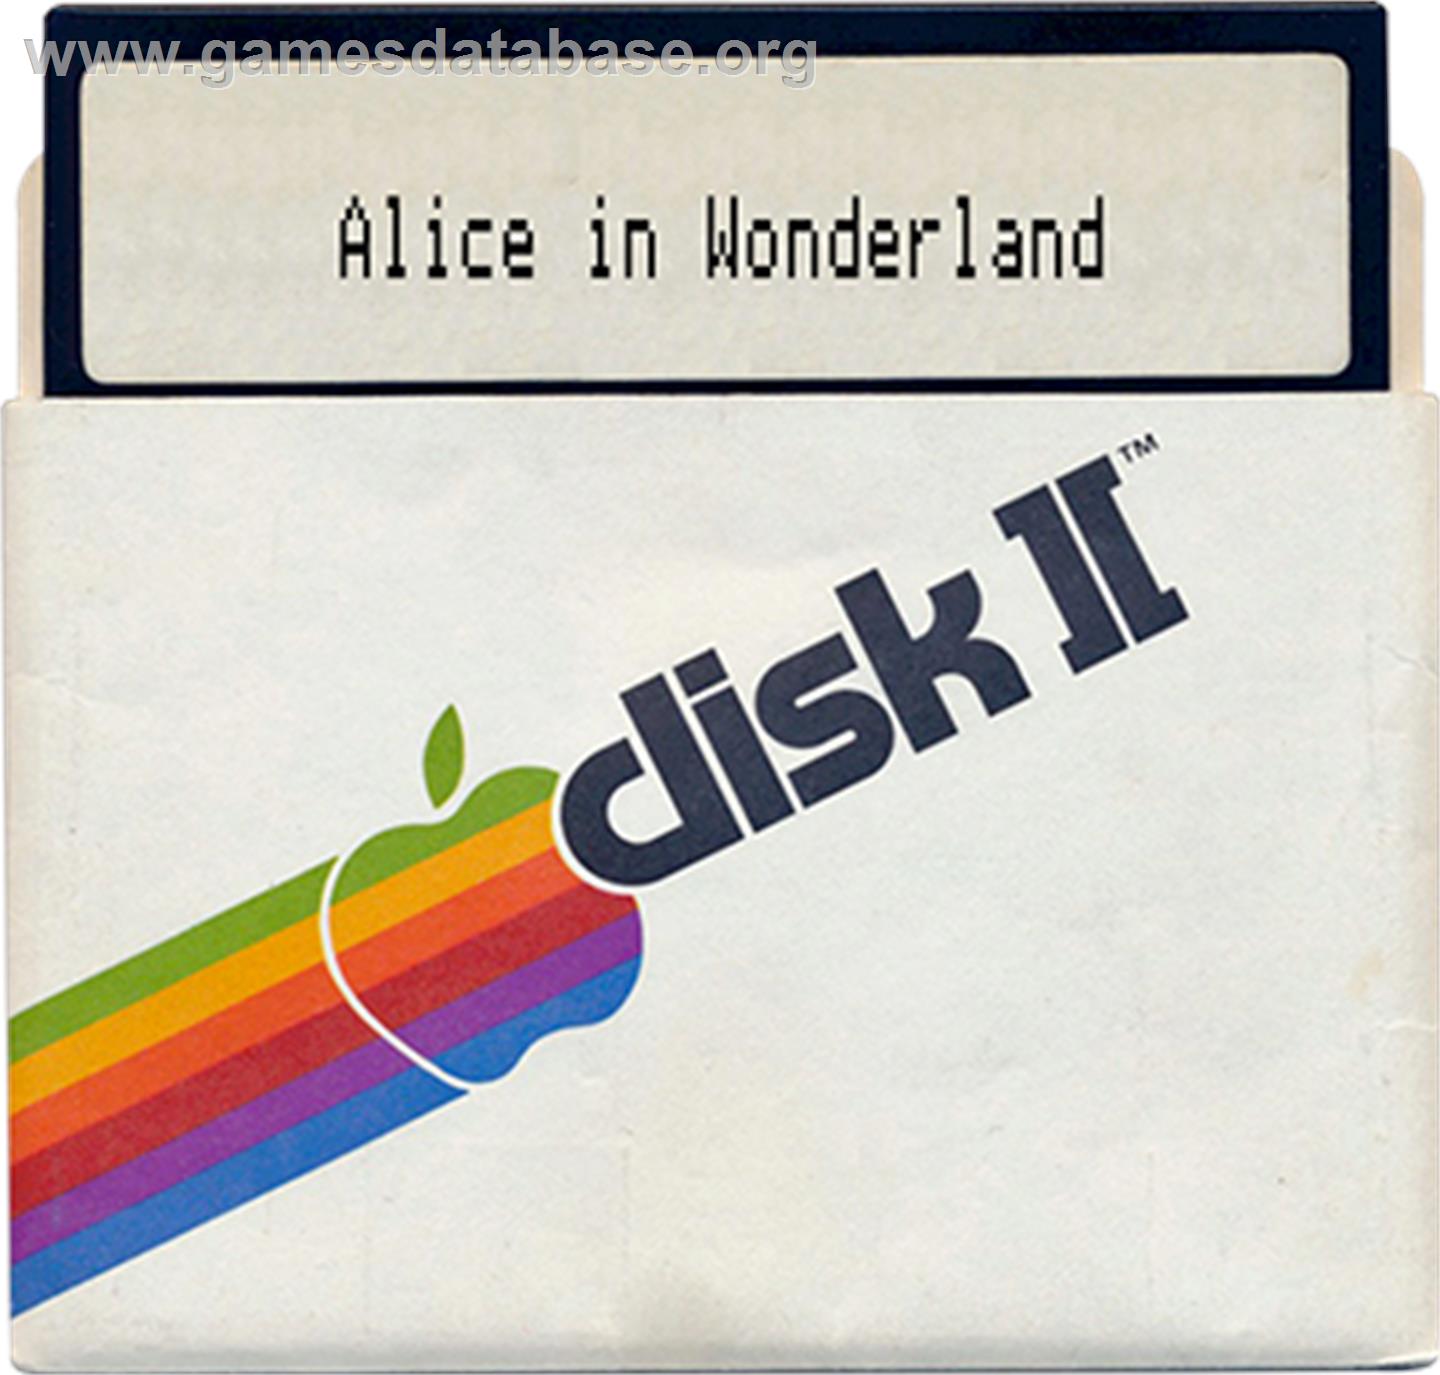 Alice in Wonderland - Apple II - Artwork - Disc